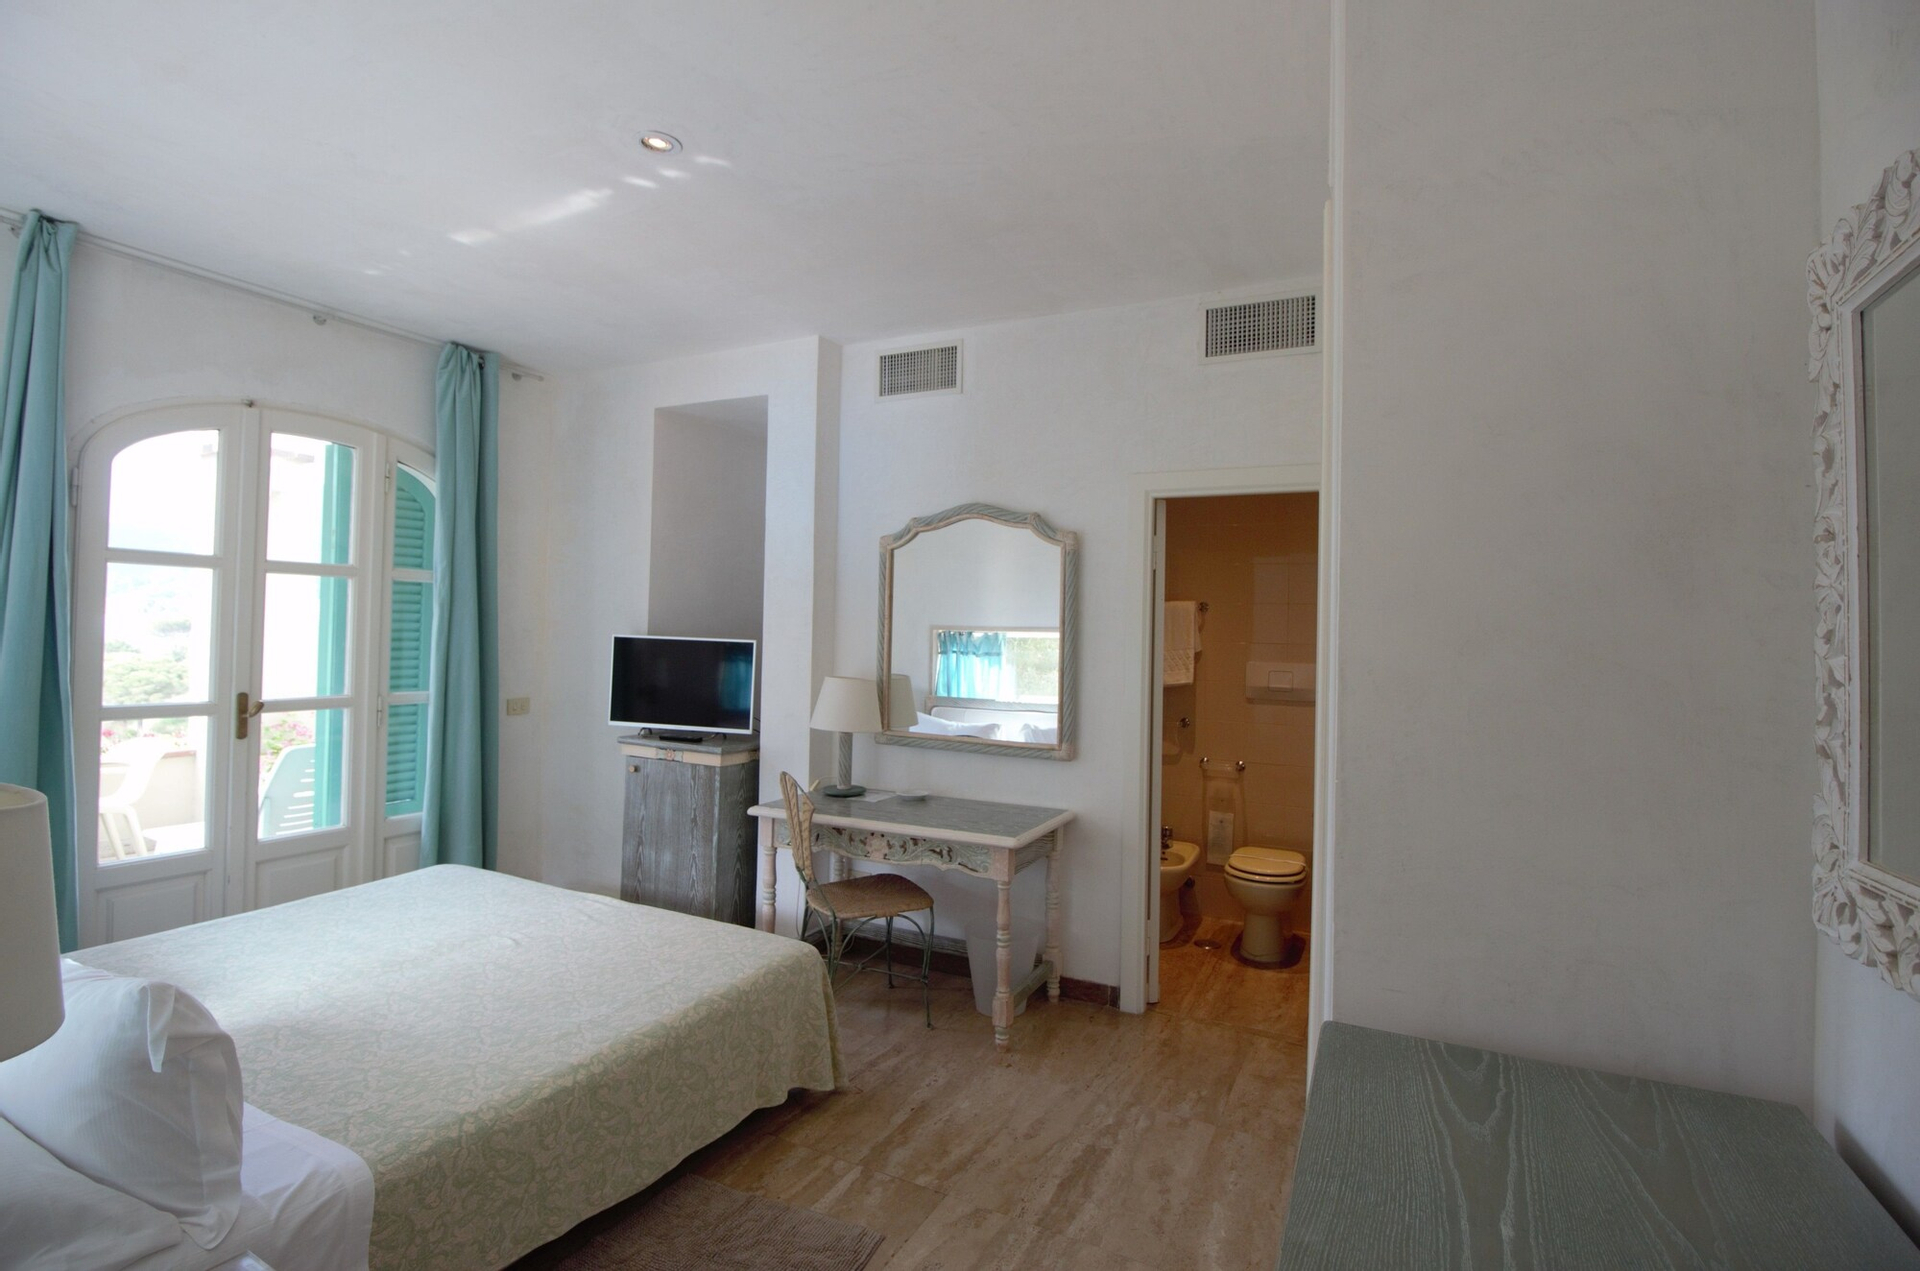 Bedroom 3, Hotel Villa Portuso, Grosseto